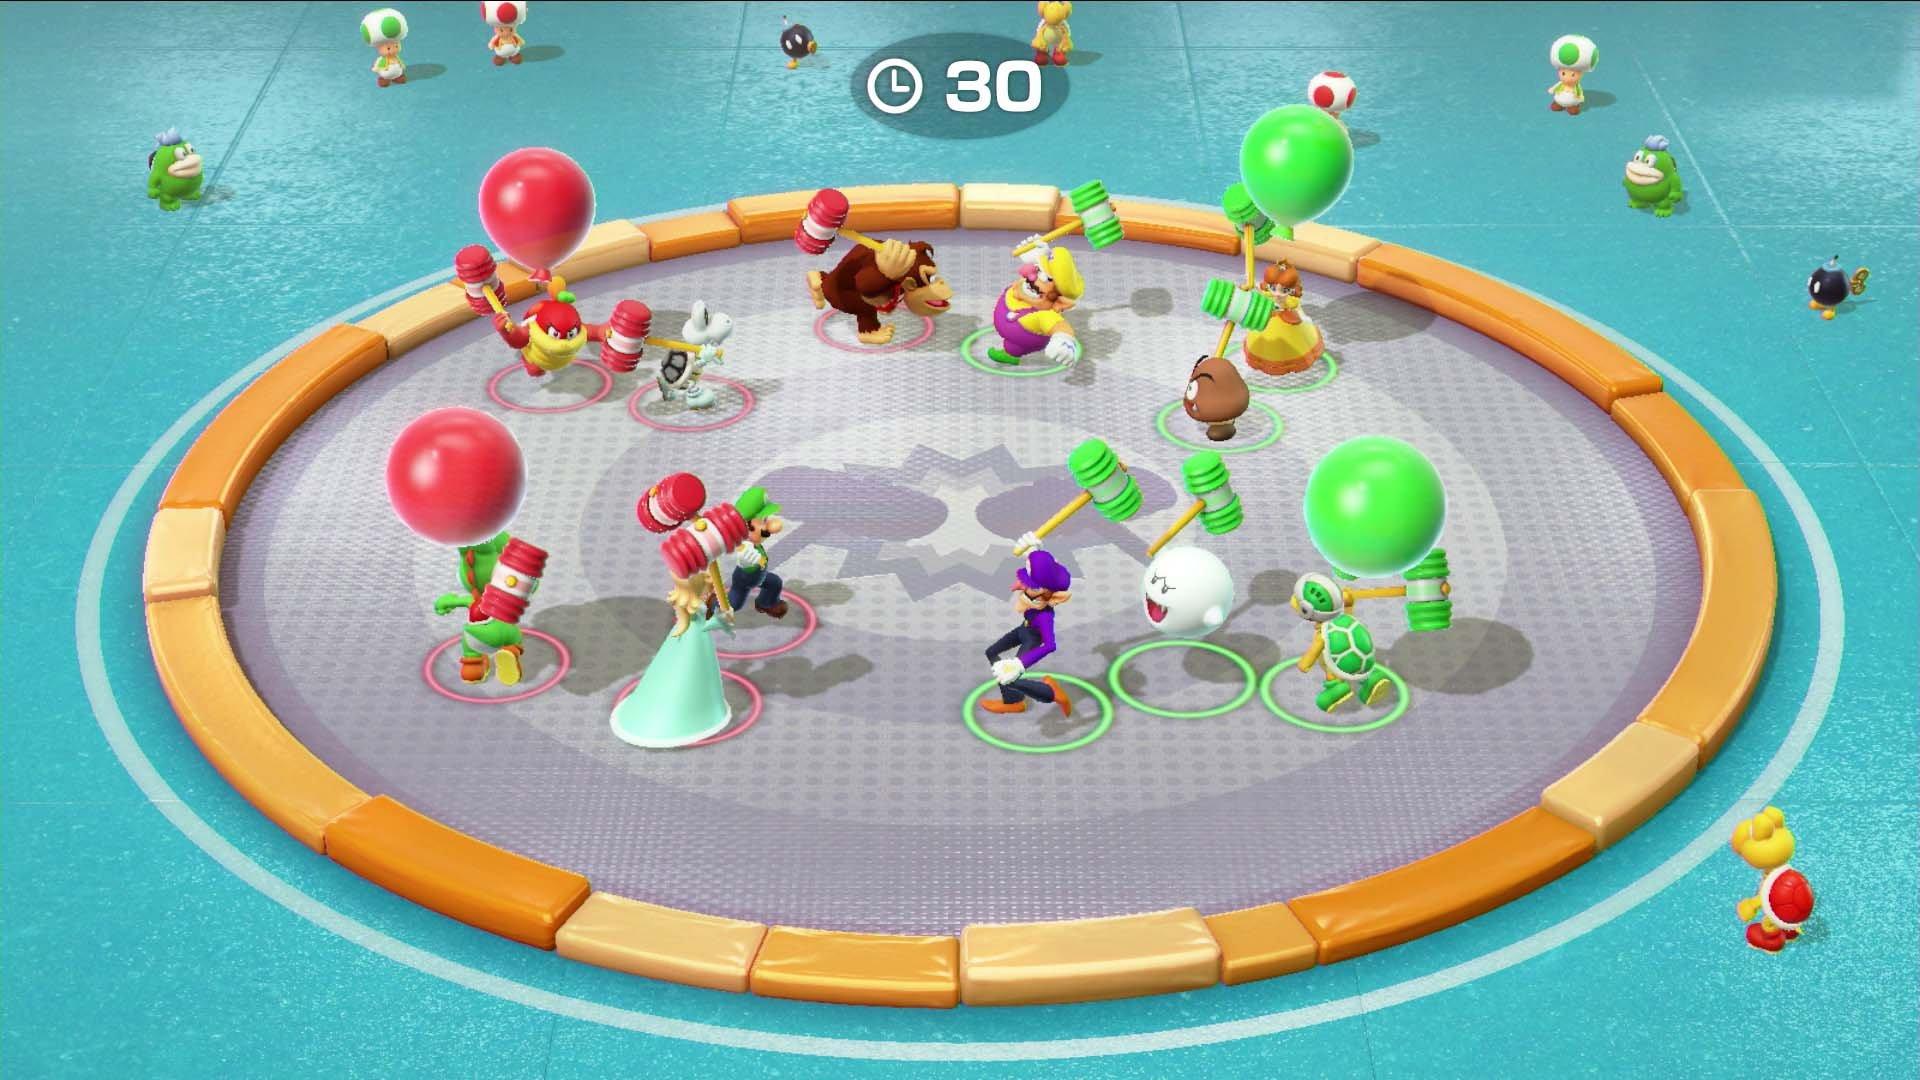 Super Mario Party - Nintendo Switch | Nintendo Switch | GameStop